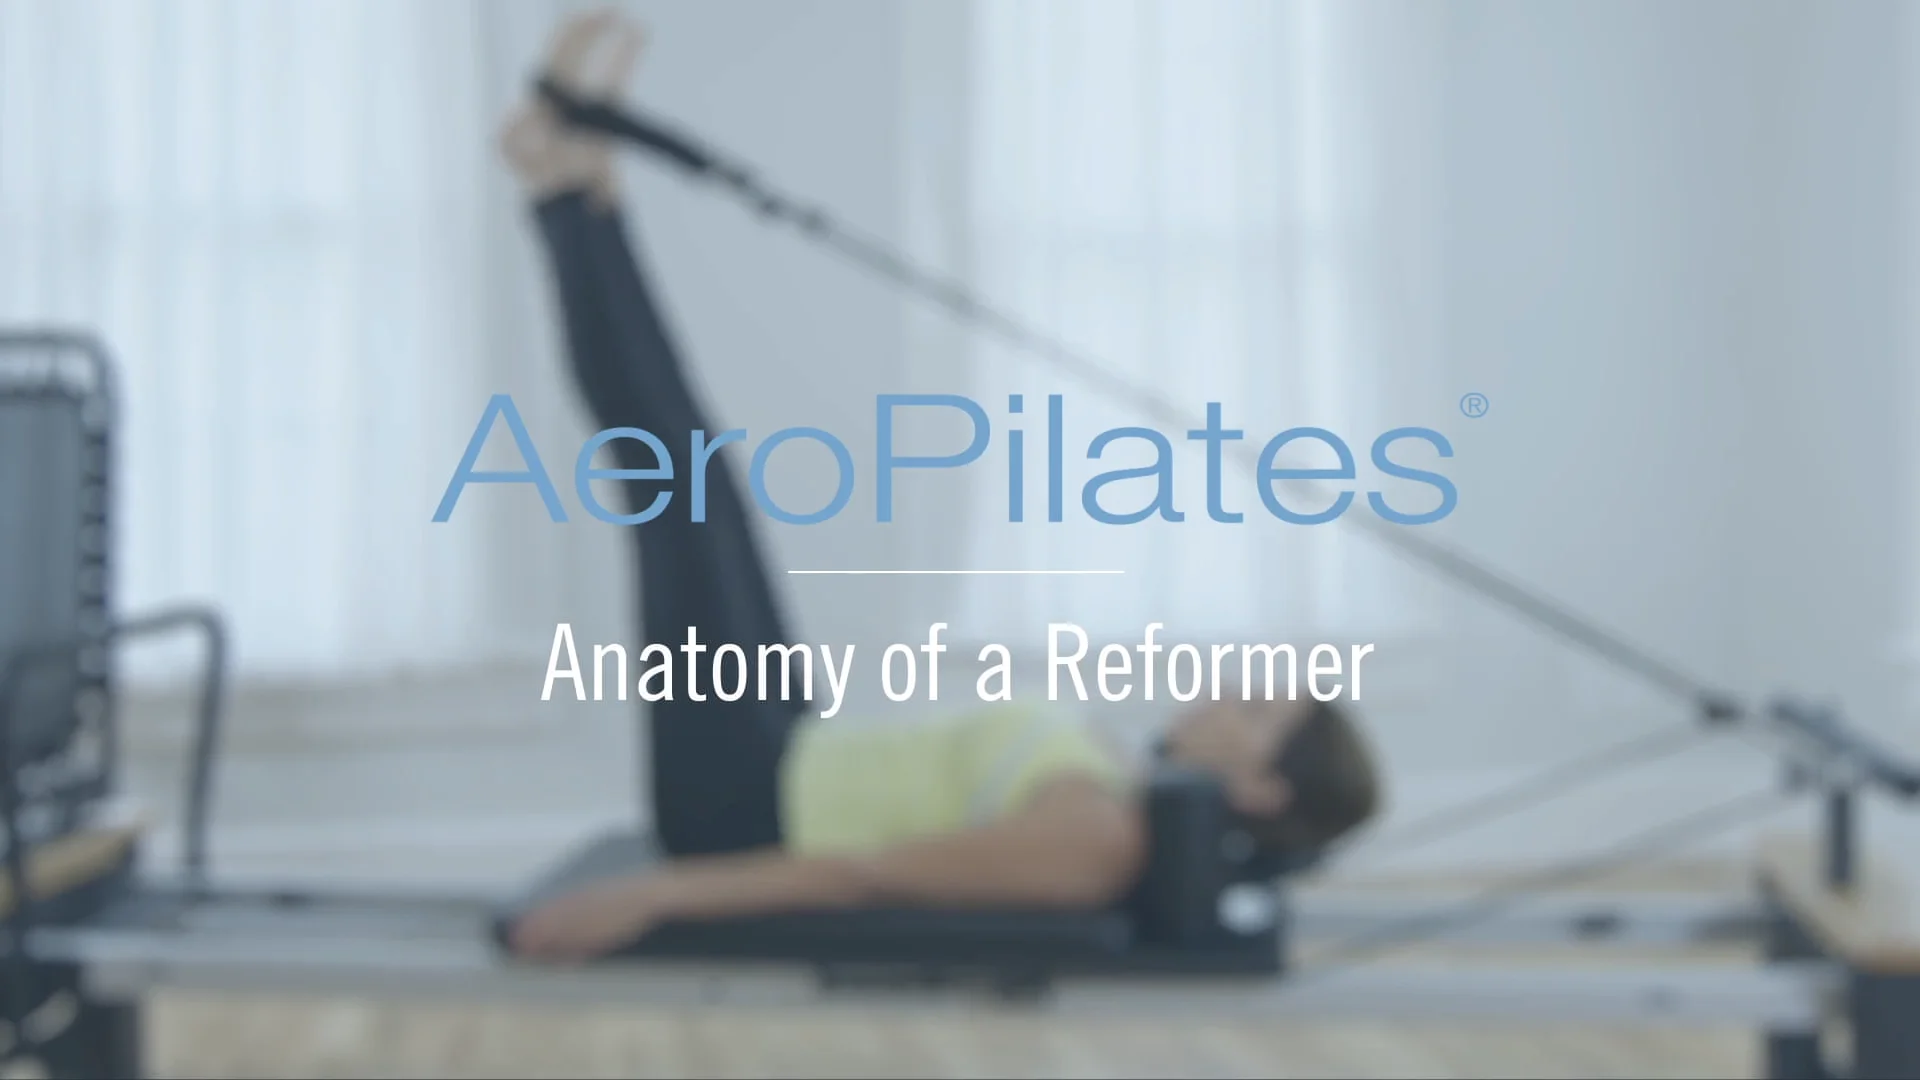 AeroPilates Precision Series Reformer 608 - 55-5608 on Vimeo